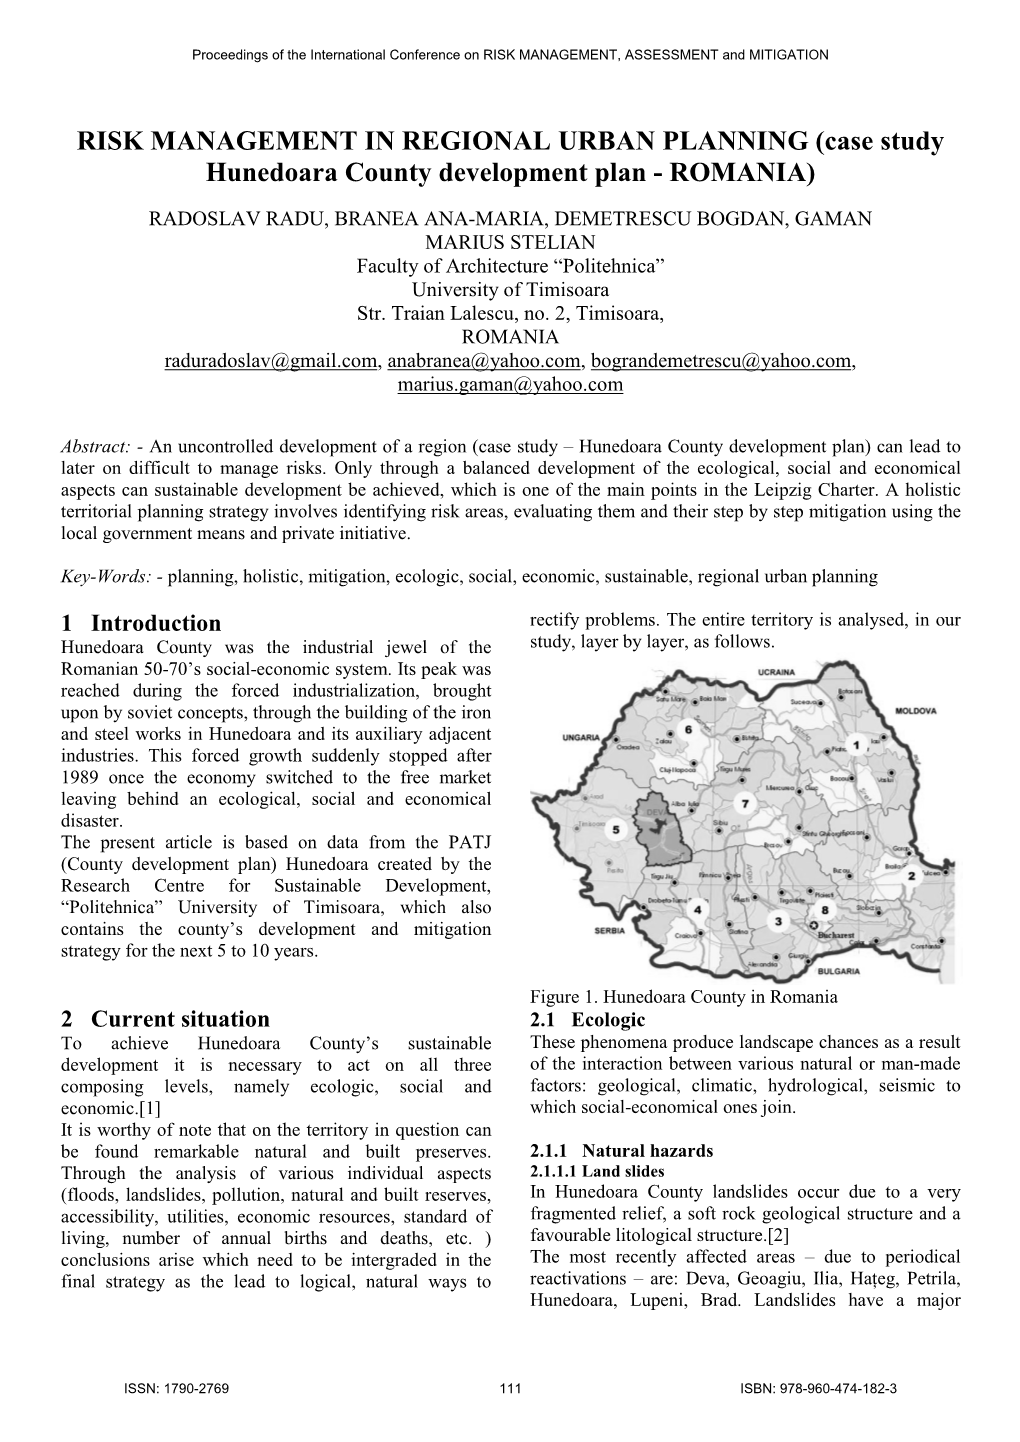 RISK MANAGEMENT in REGIONAL URBAN PLANNING (Case Study Hunedoara County Development Plan - ROMANIA)